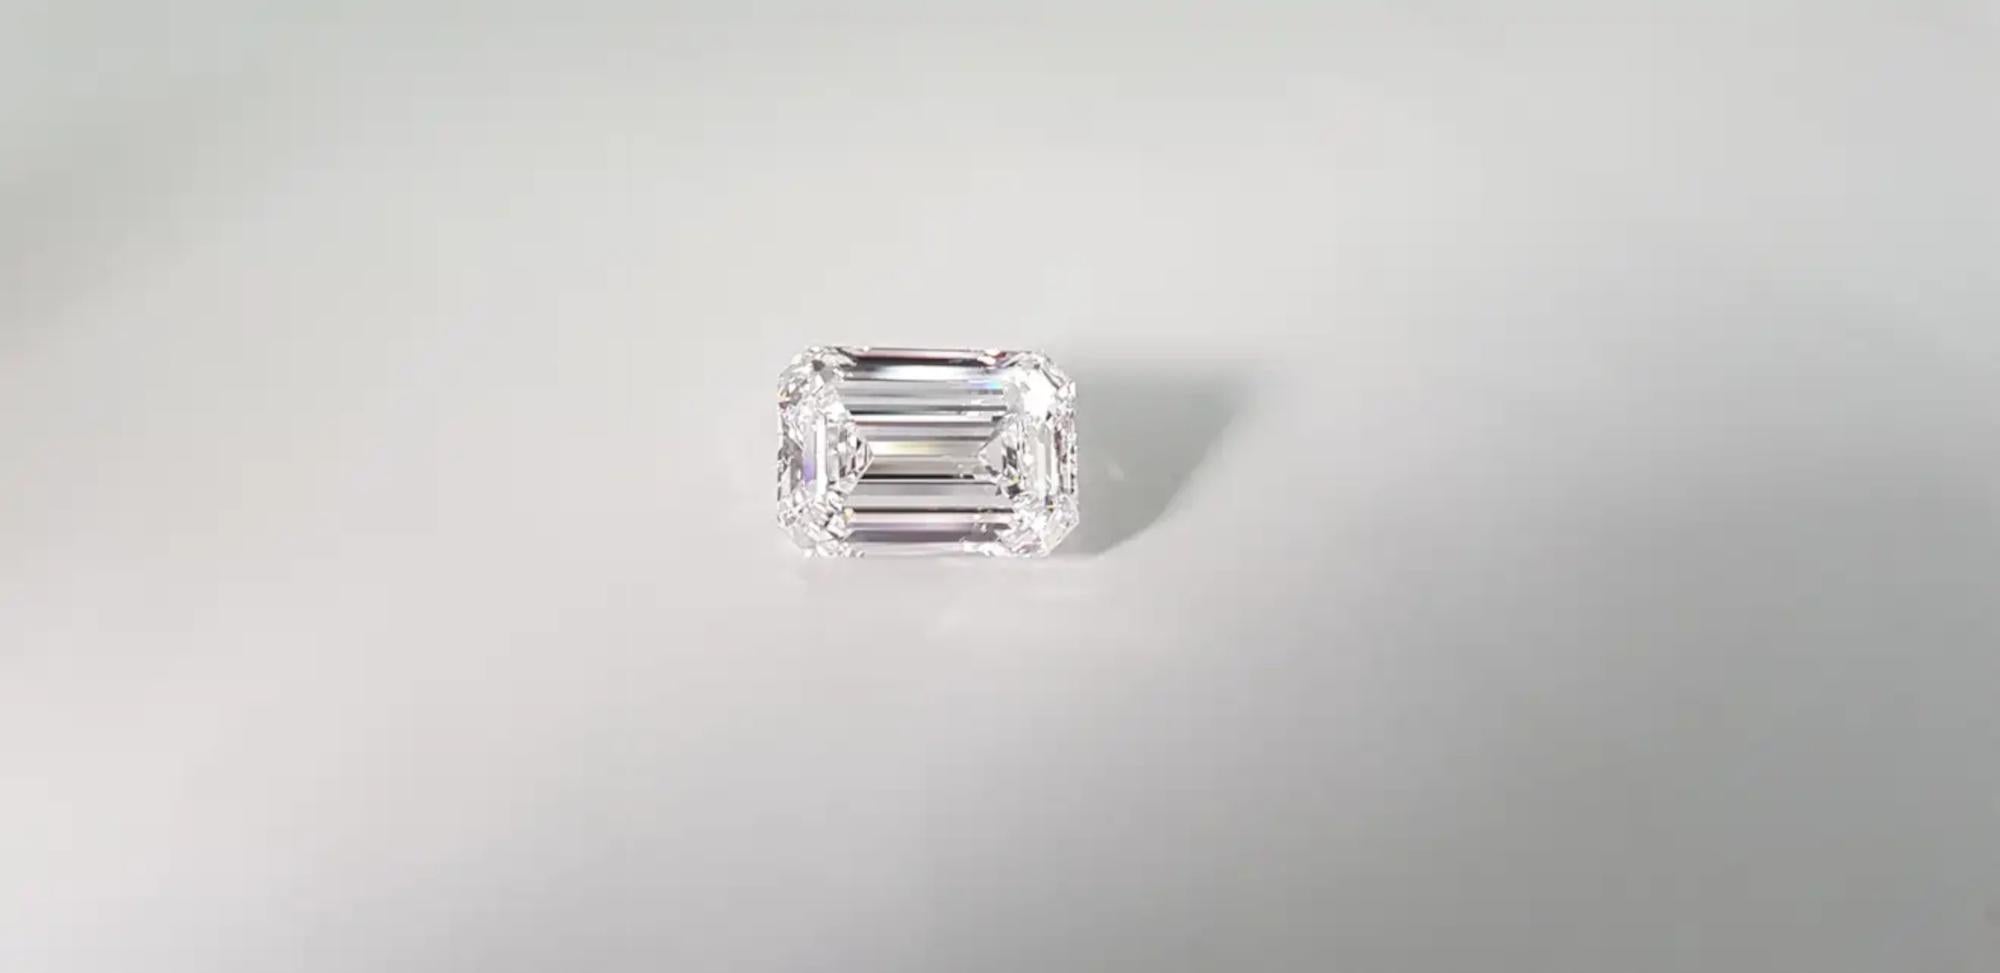 GIA Certified 6 Carat Emerald Cut Diamond Solitaire Ring

